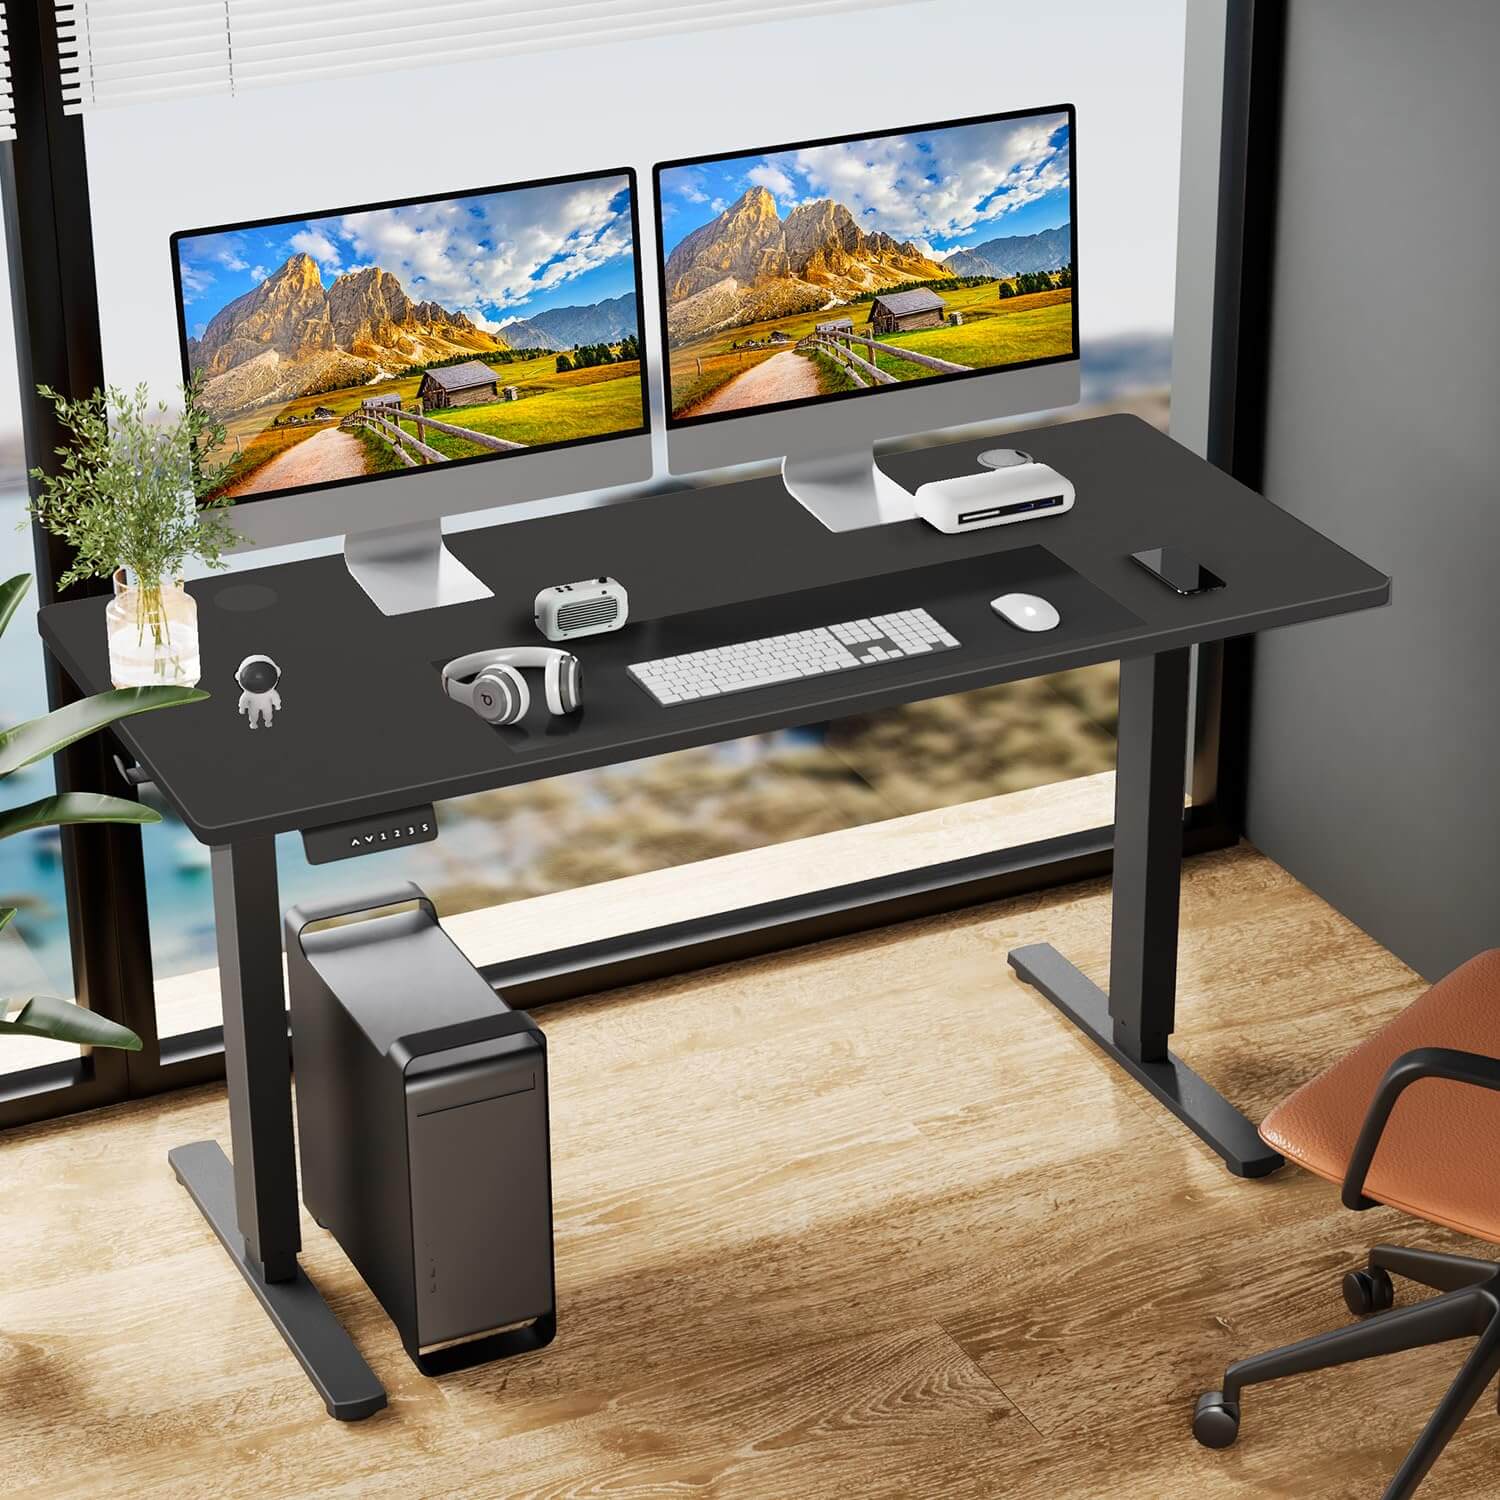 electric-adjustable-standing-desk#Color_Black#Size_40'' x 24"